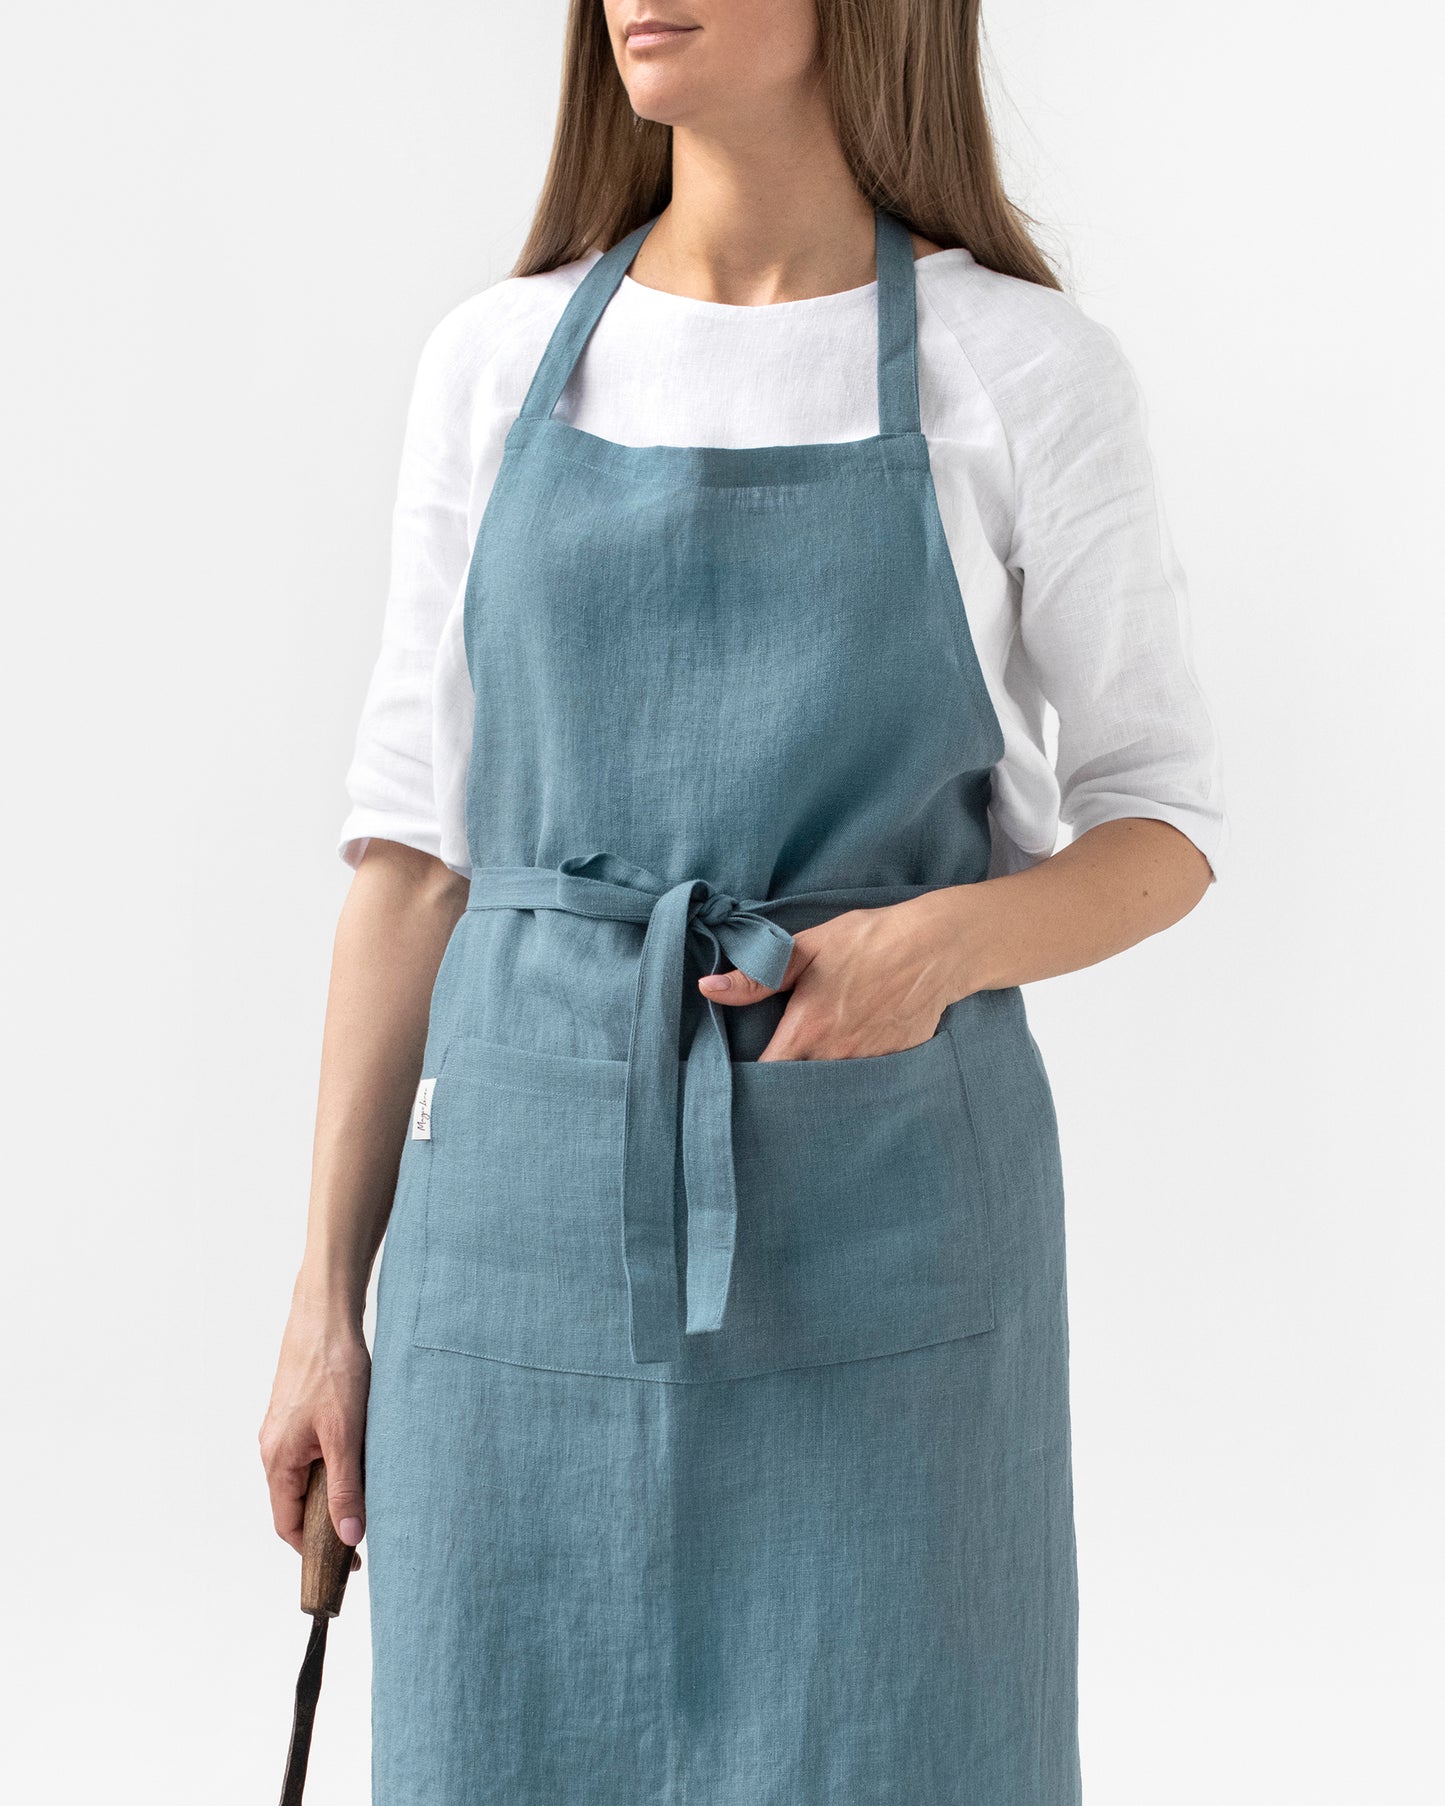 Linen bib apron in Gray blue - MagicLinen